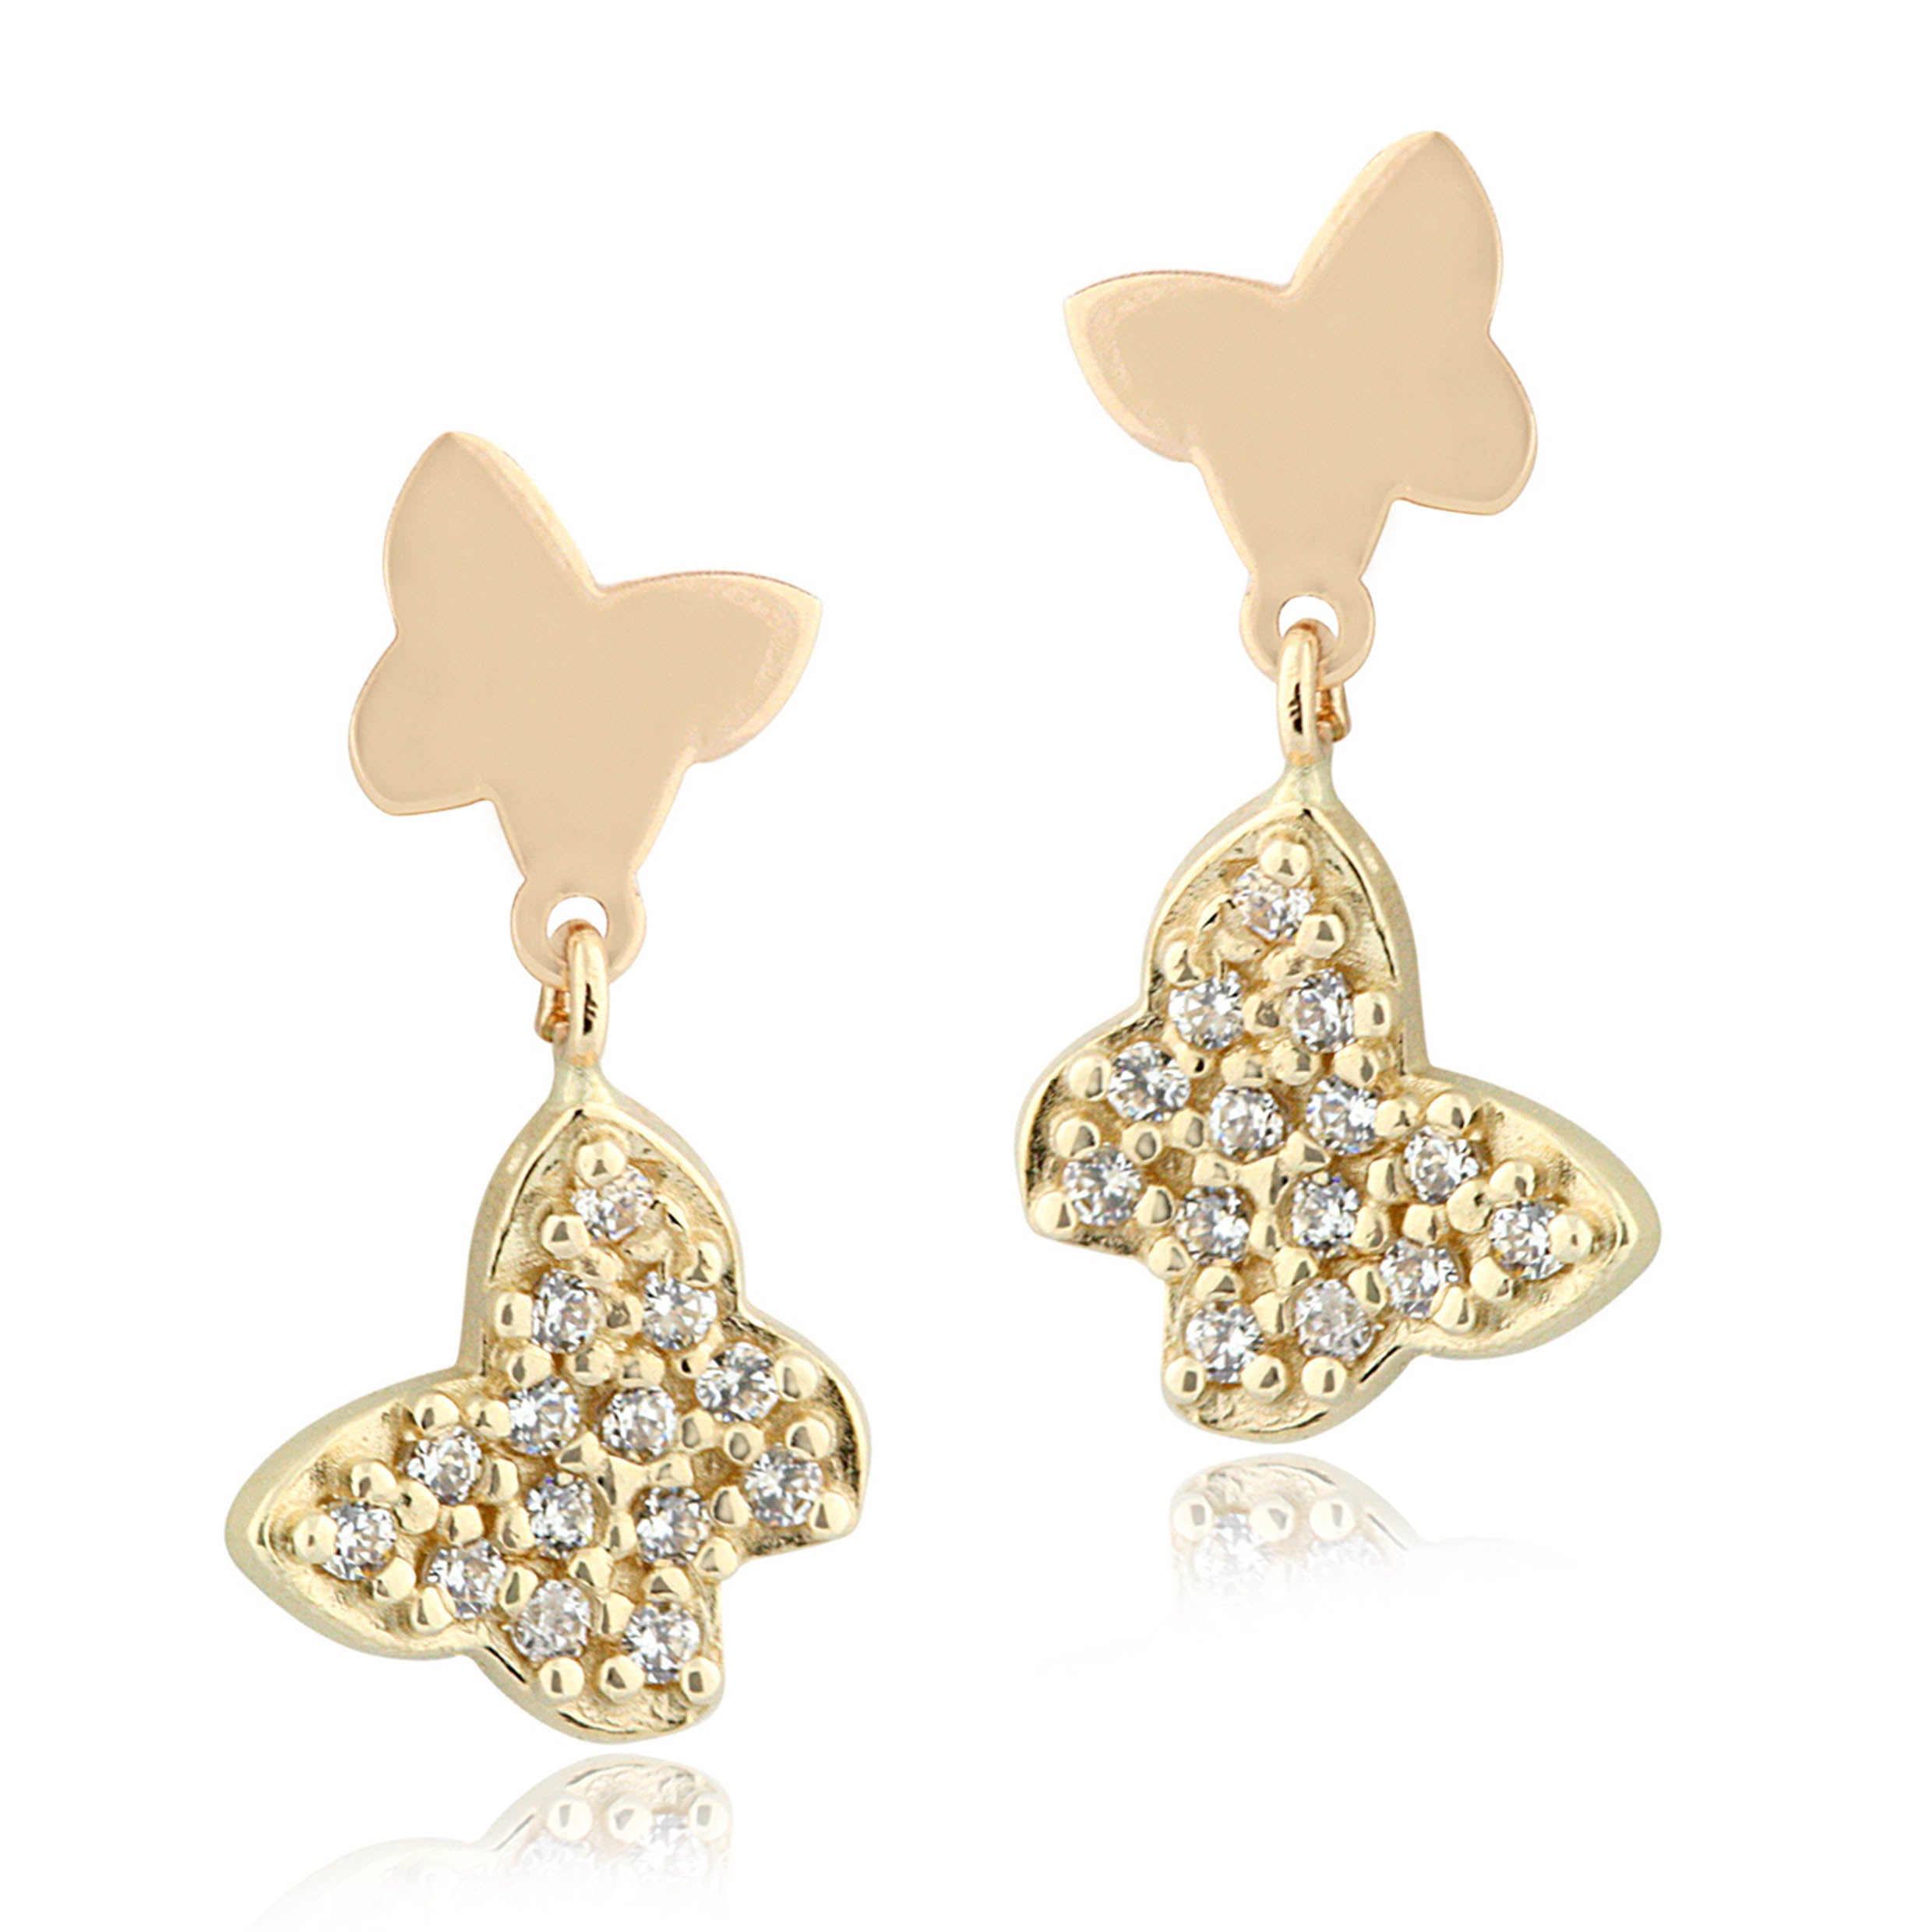 Butterfly Earrings in 14K Gold with CZ Pave Double Butterfly Dangle Post Earrings Italy